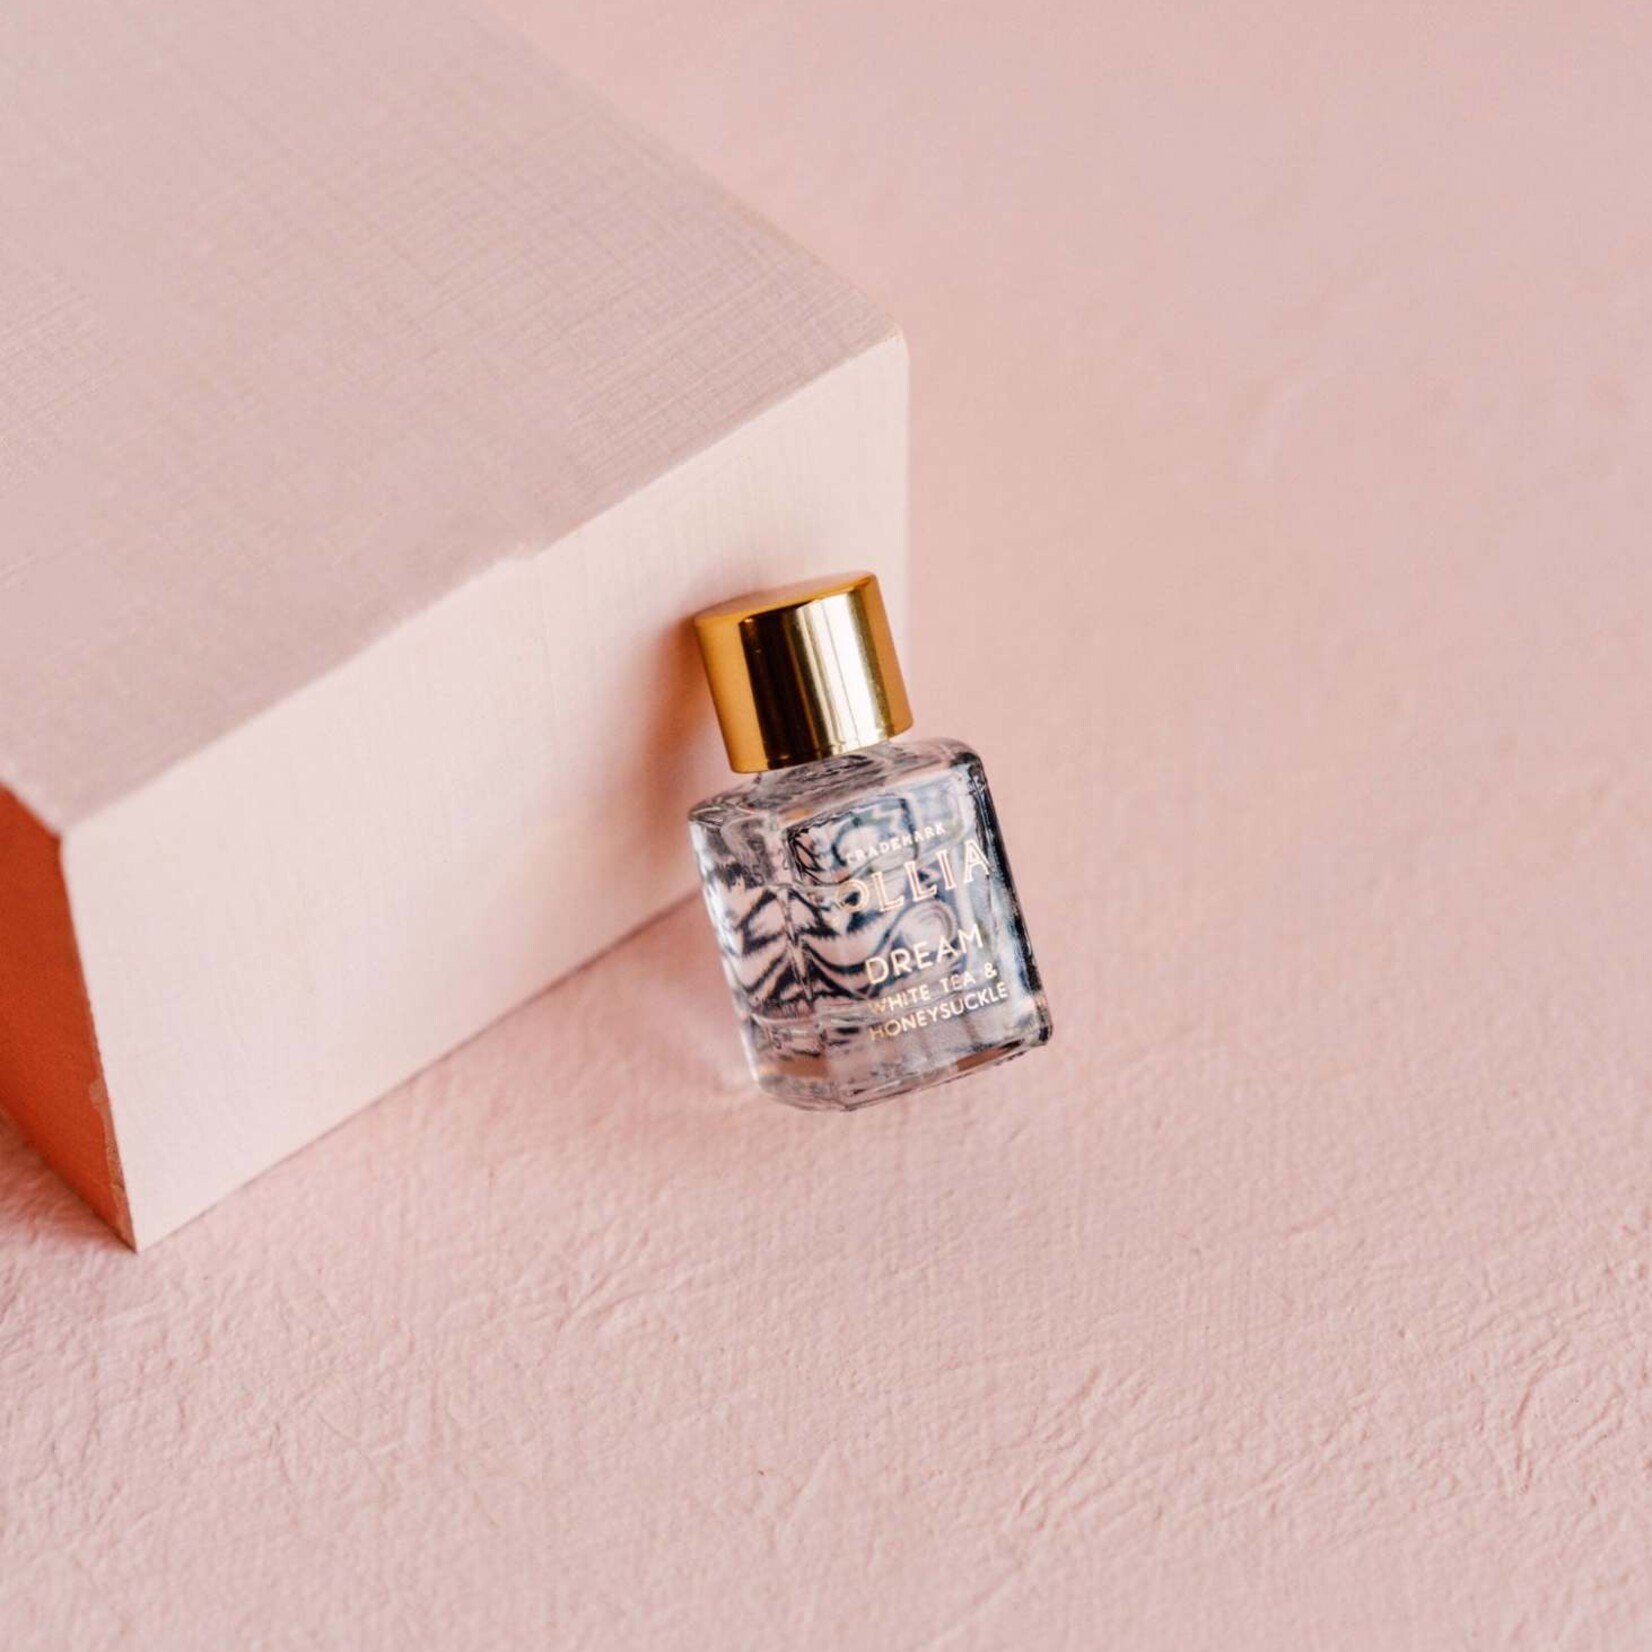 Lollia Little Luxe Parfum